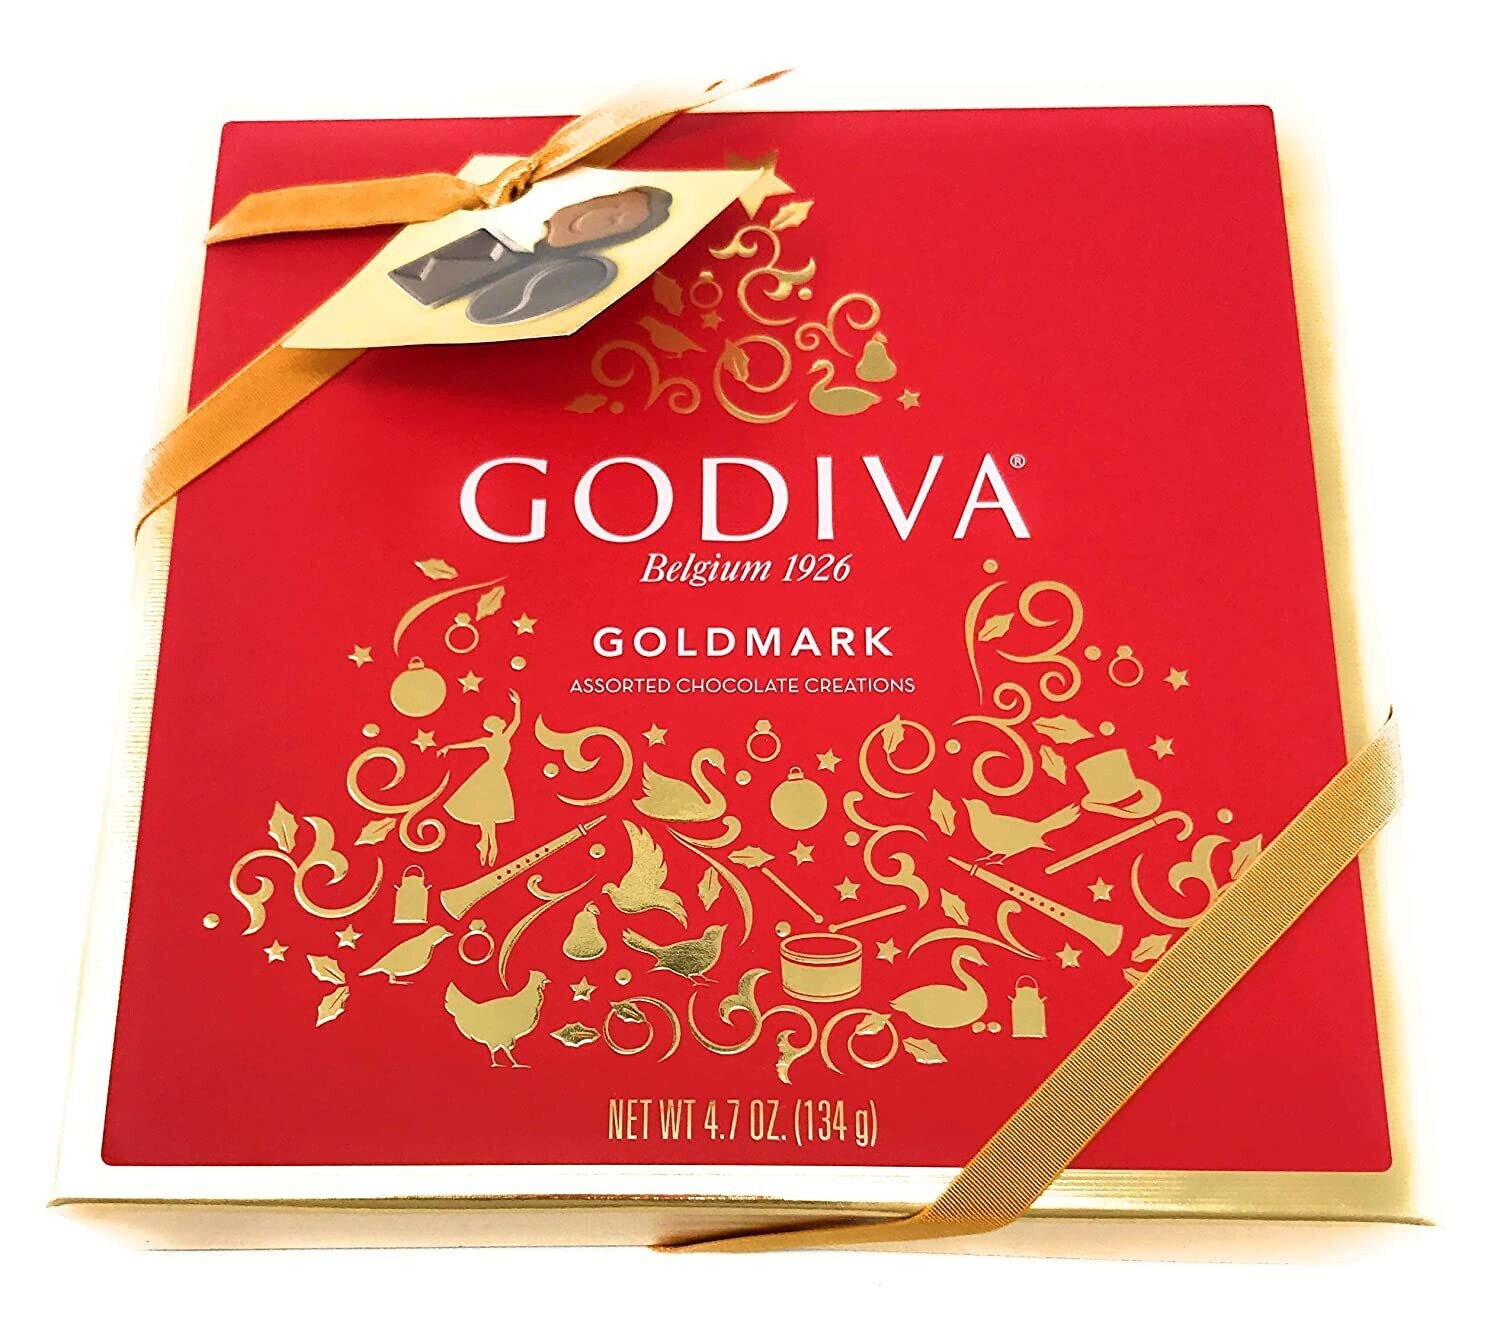 Godiva Goldmark Assorted Chocolate Creations